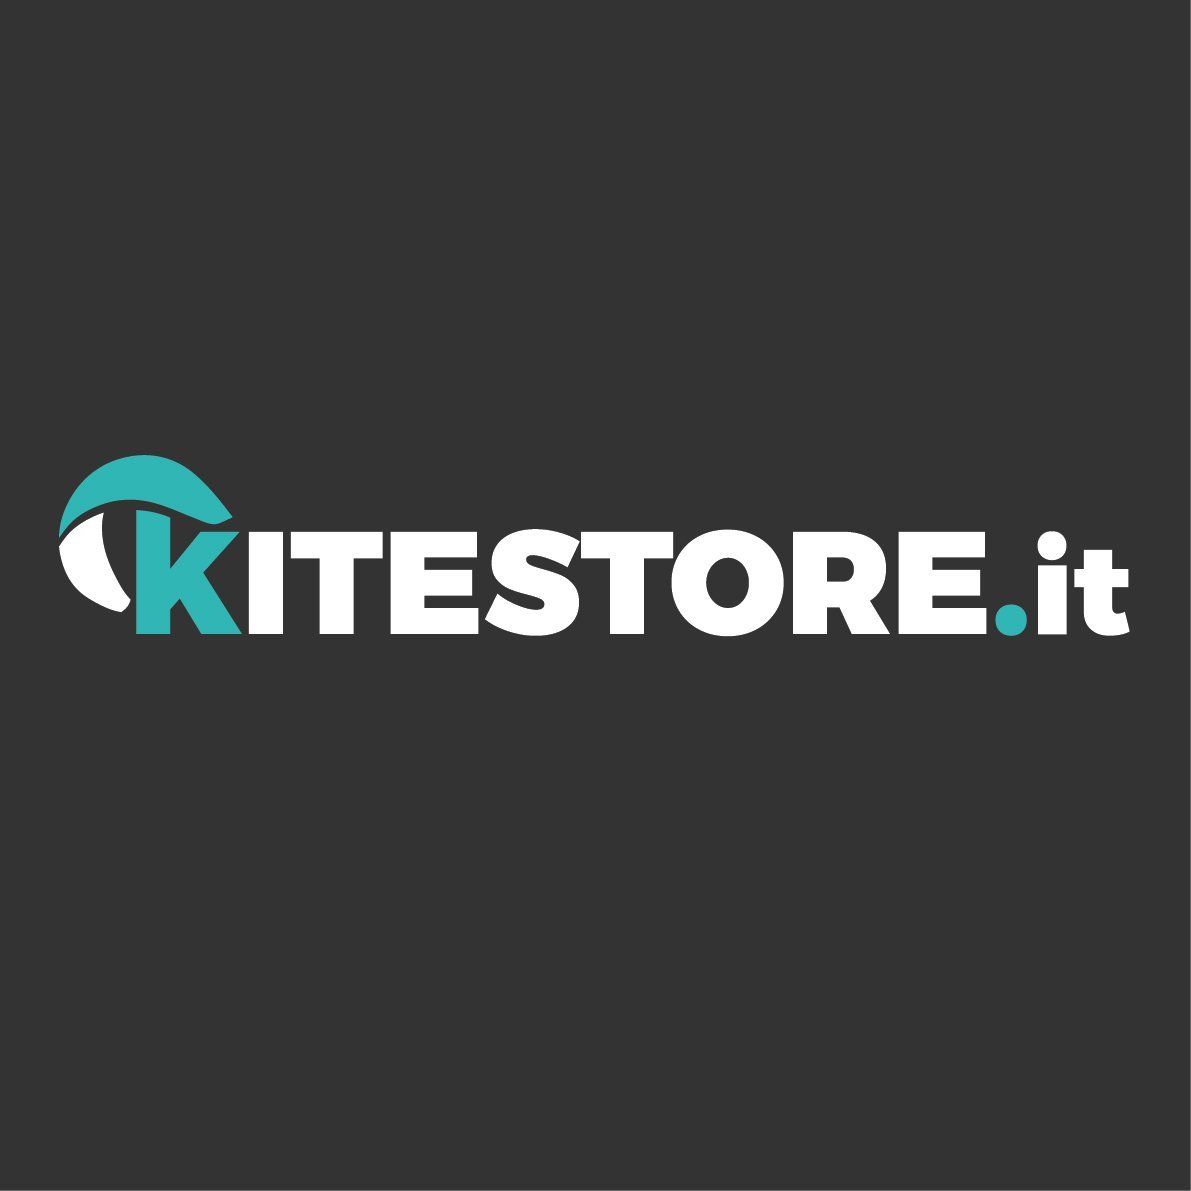 KiteStore.it